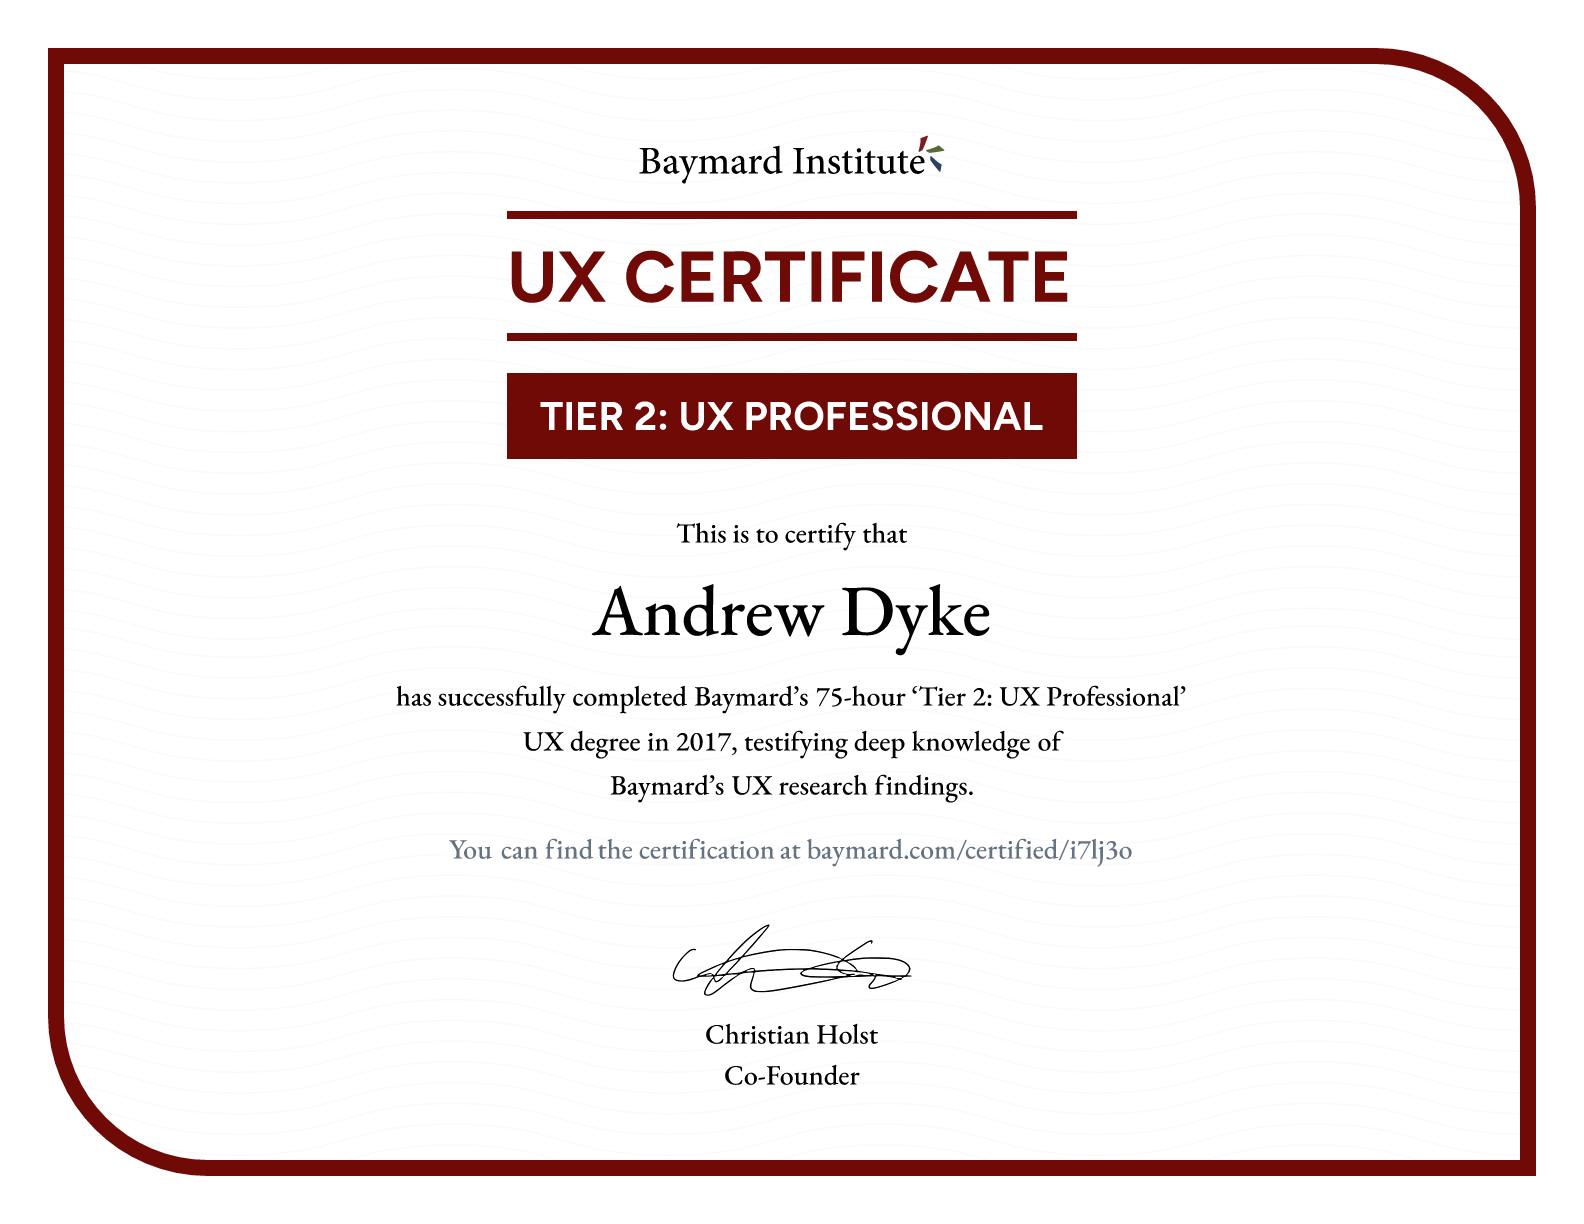 Andrew Dyke’s certificate